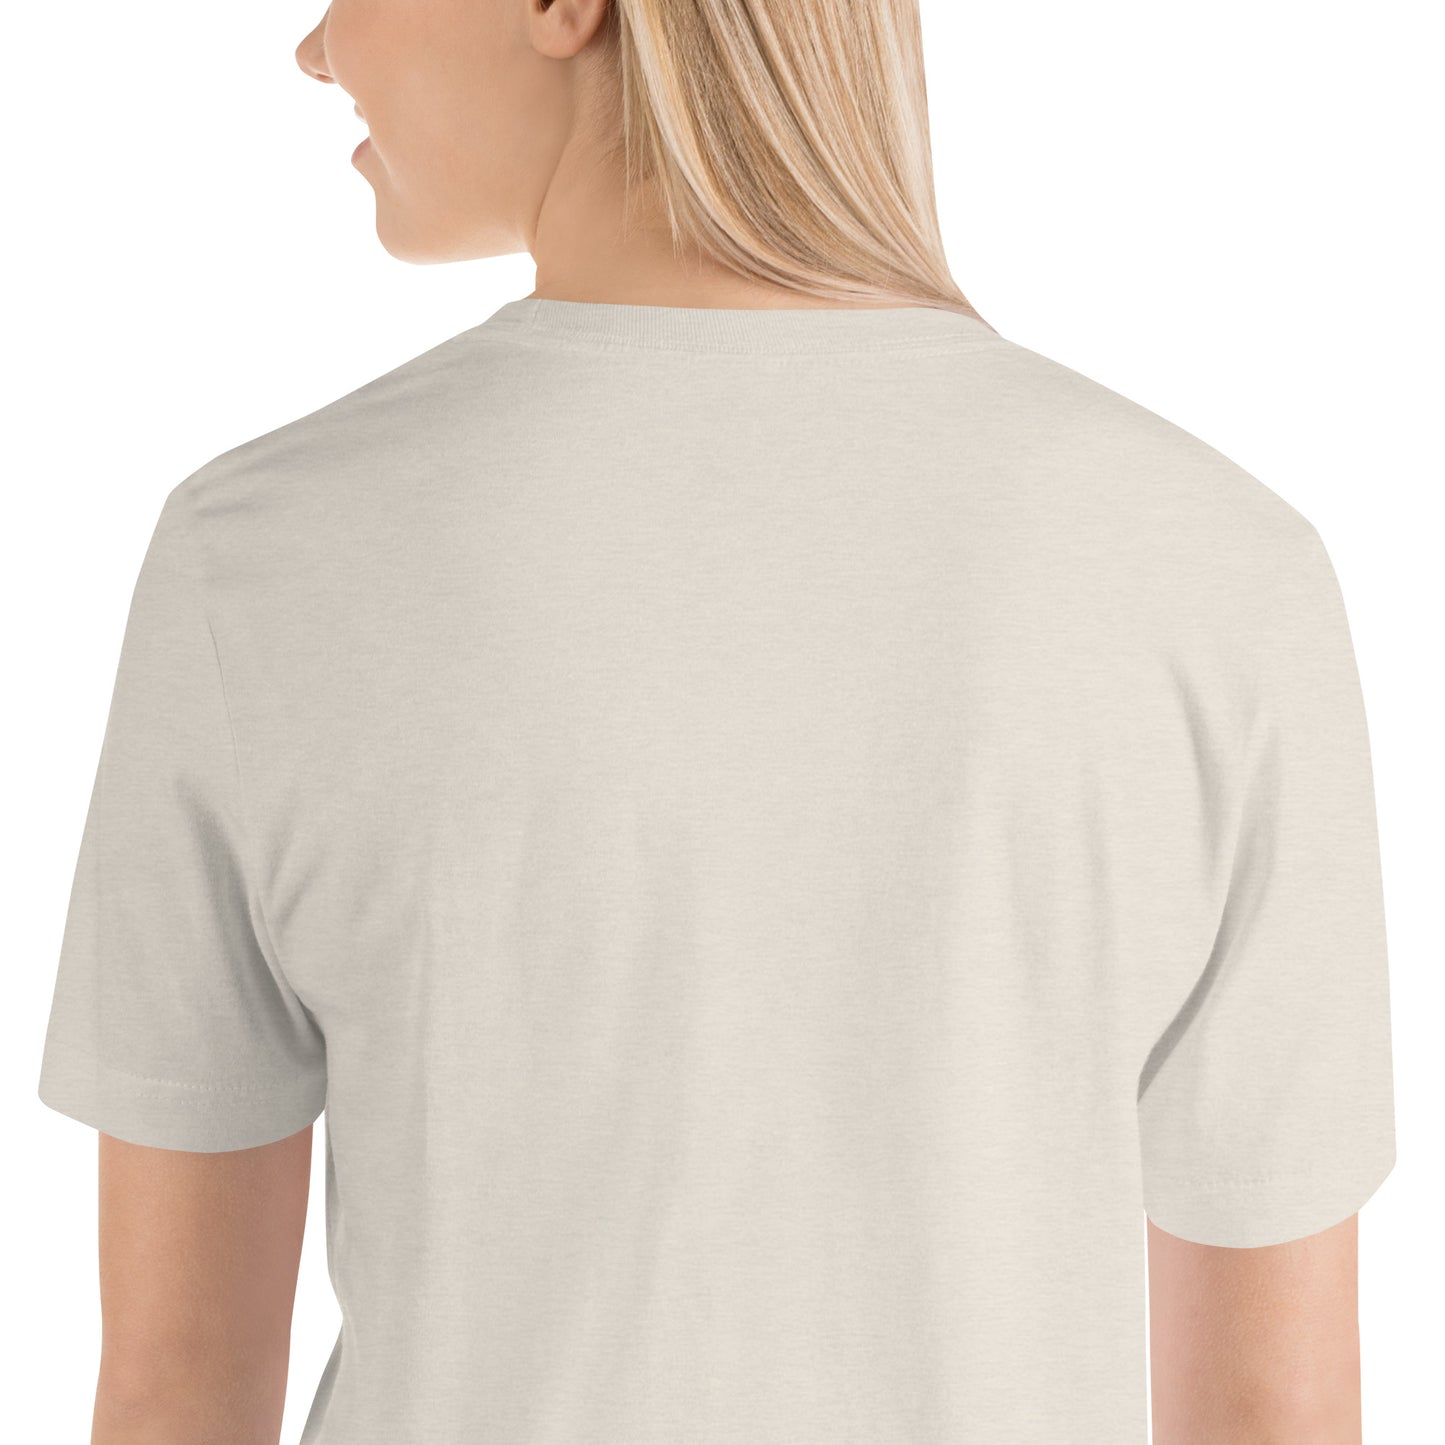 Women's Relaxed Soft & Smooth Premium Quality T-Shirt Shake Your Shamrocks Saint Patrick's Day Design by IOBI Original Apparel